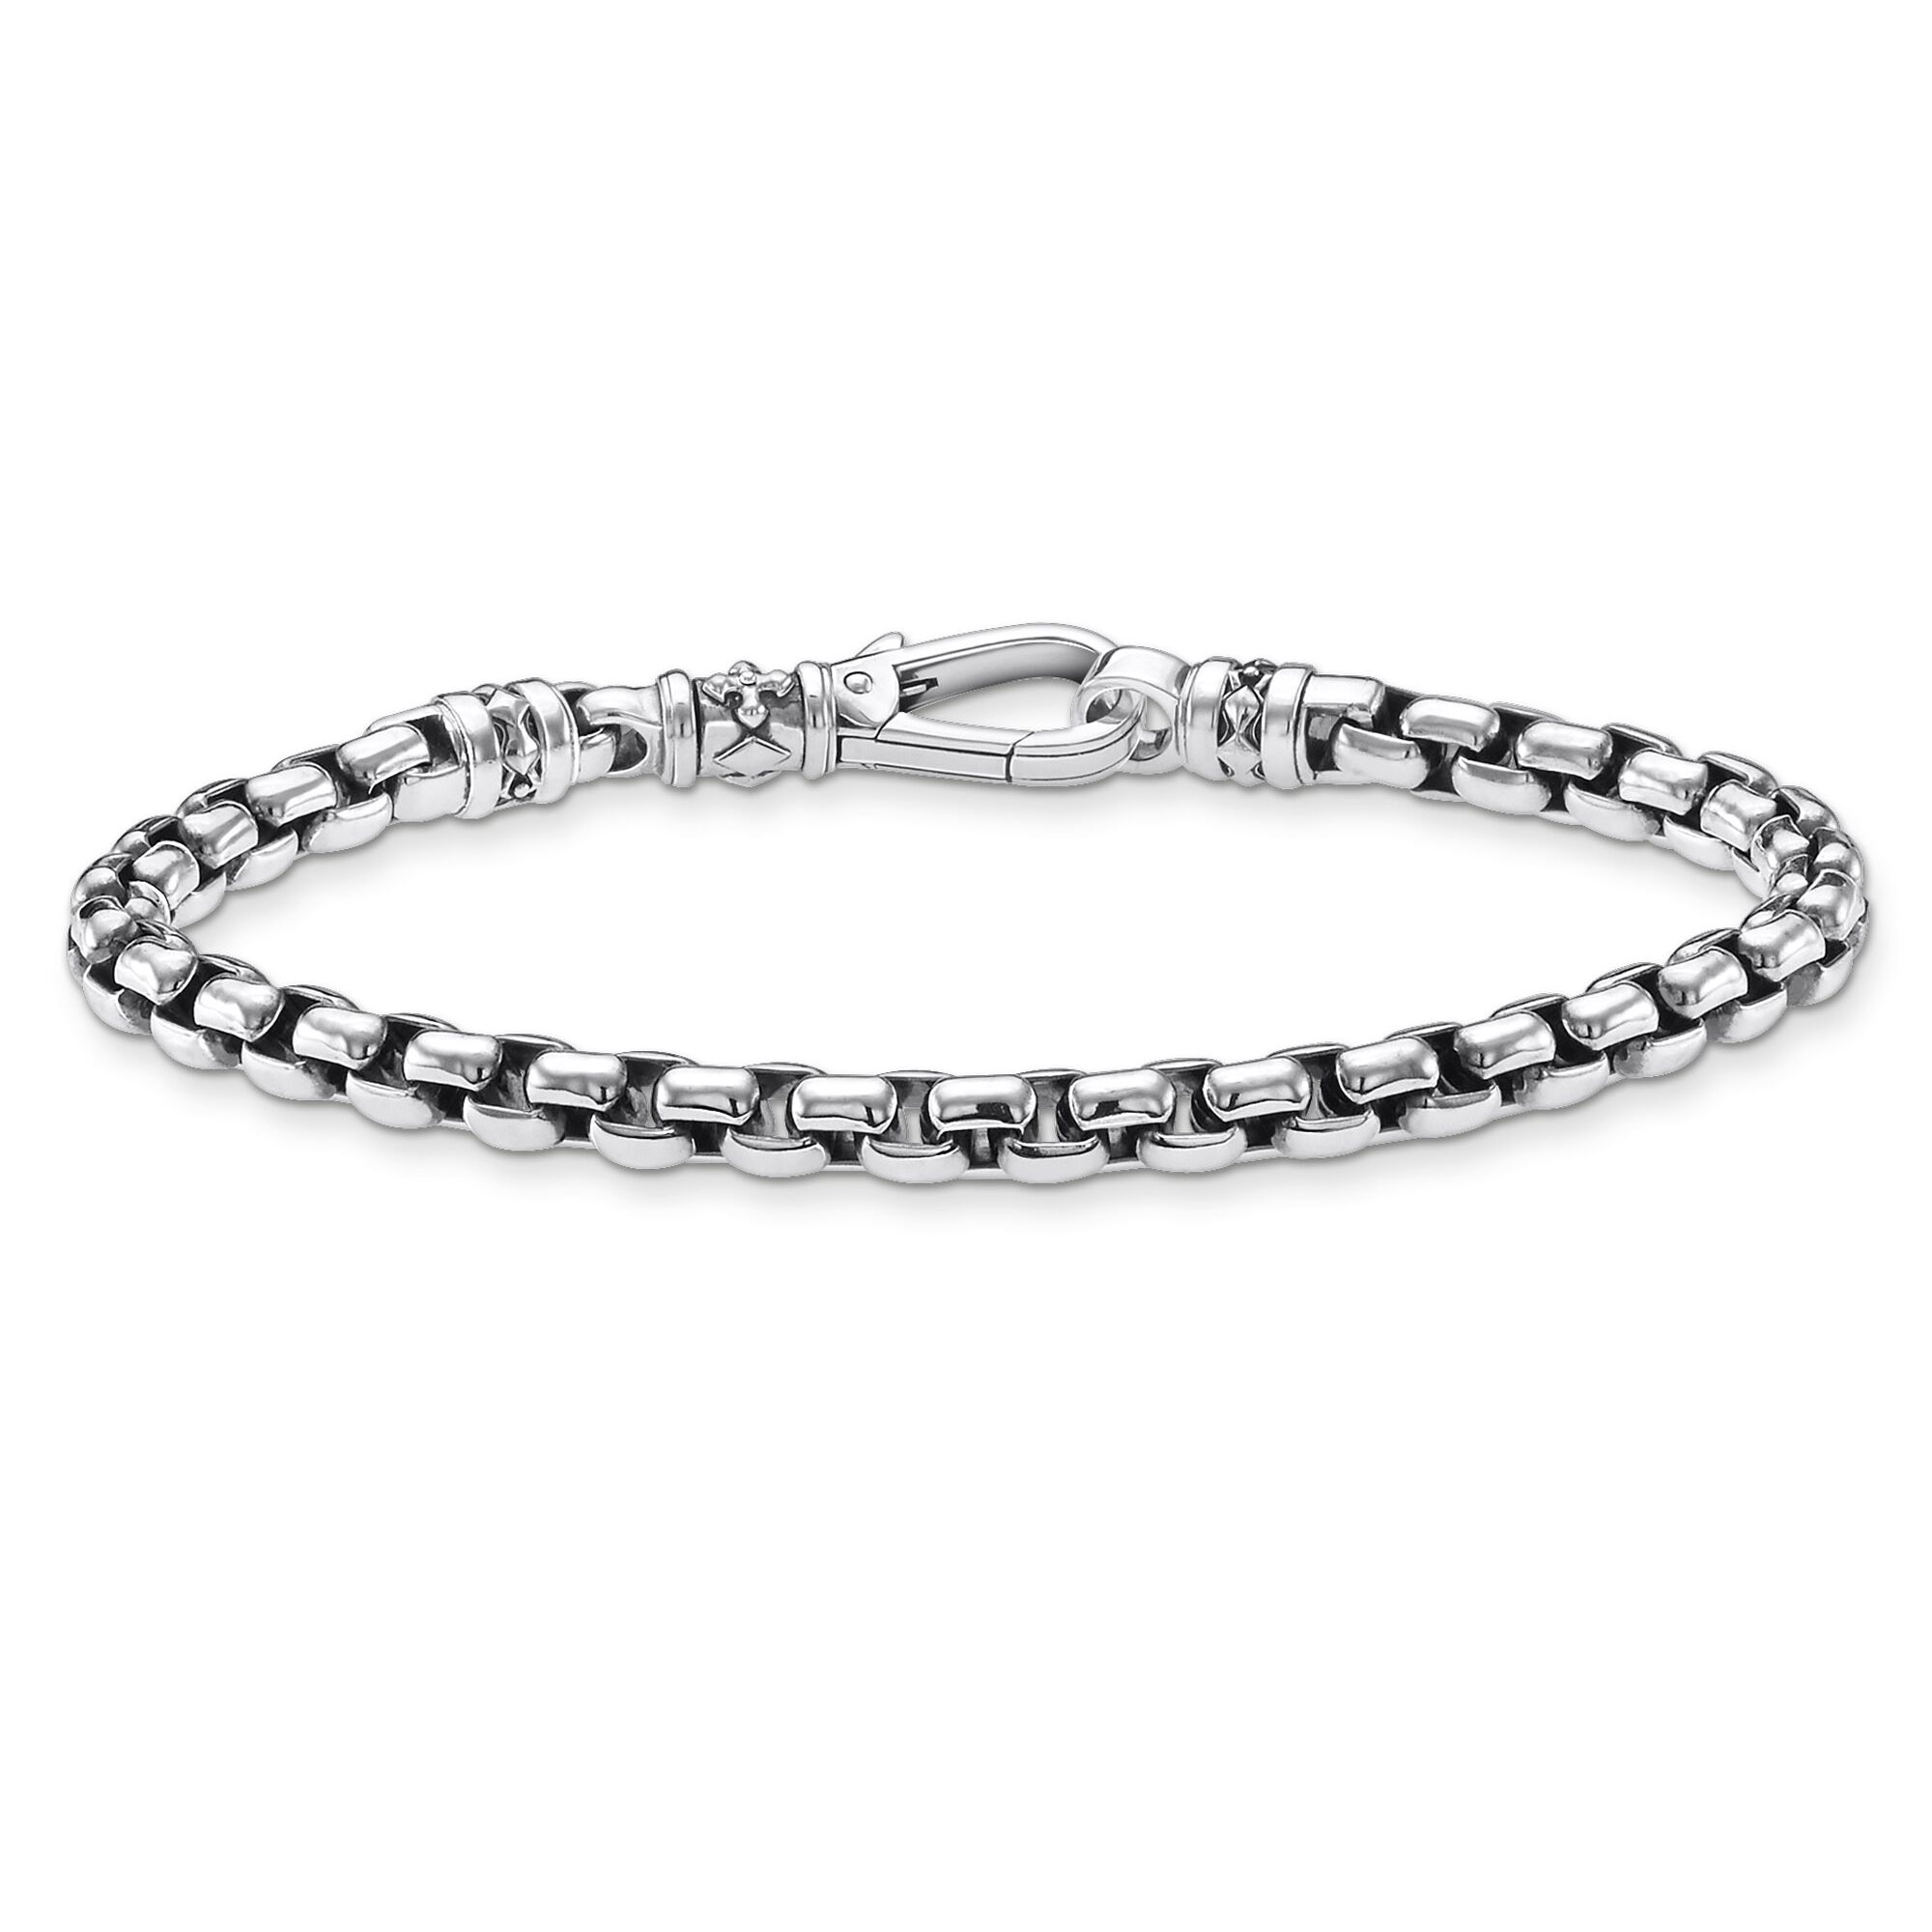 Wholesale Custom mens Bracelet 925 Sterling silver OEM/ODM Jewelry, blackened,silver-coloured ODM